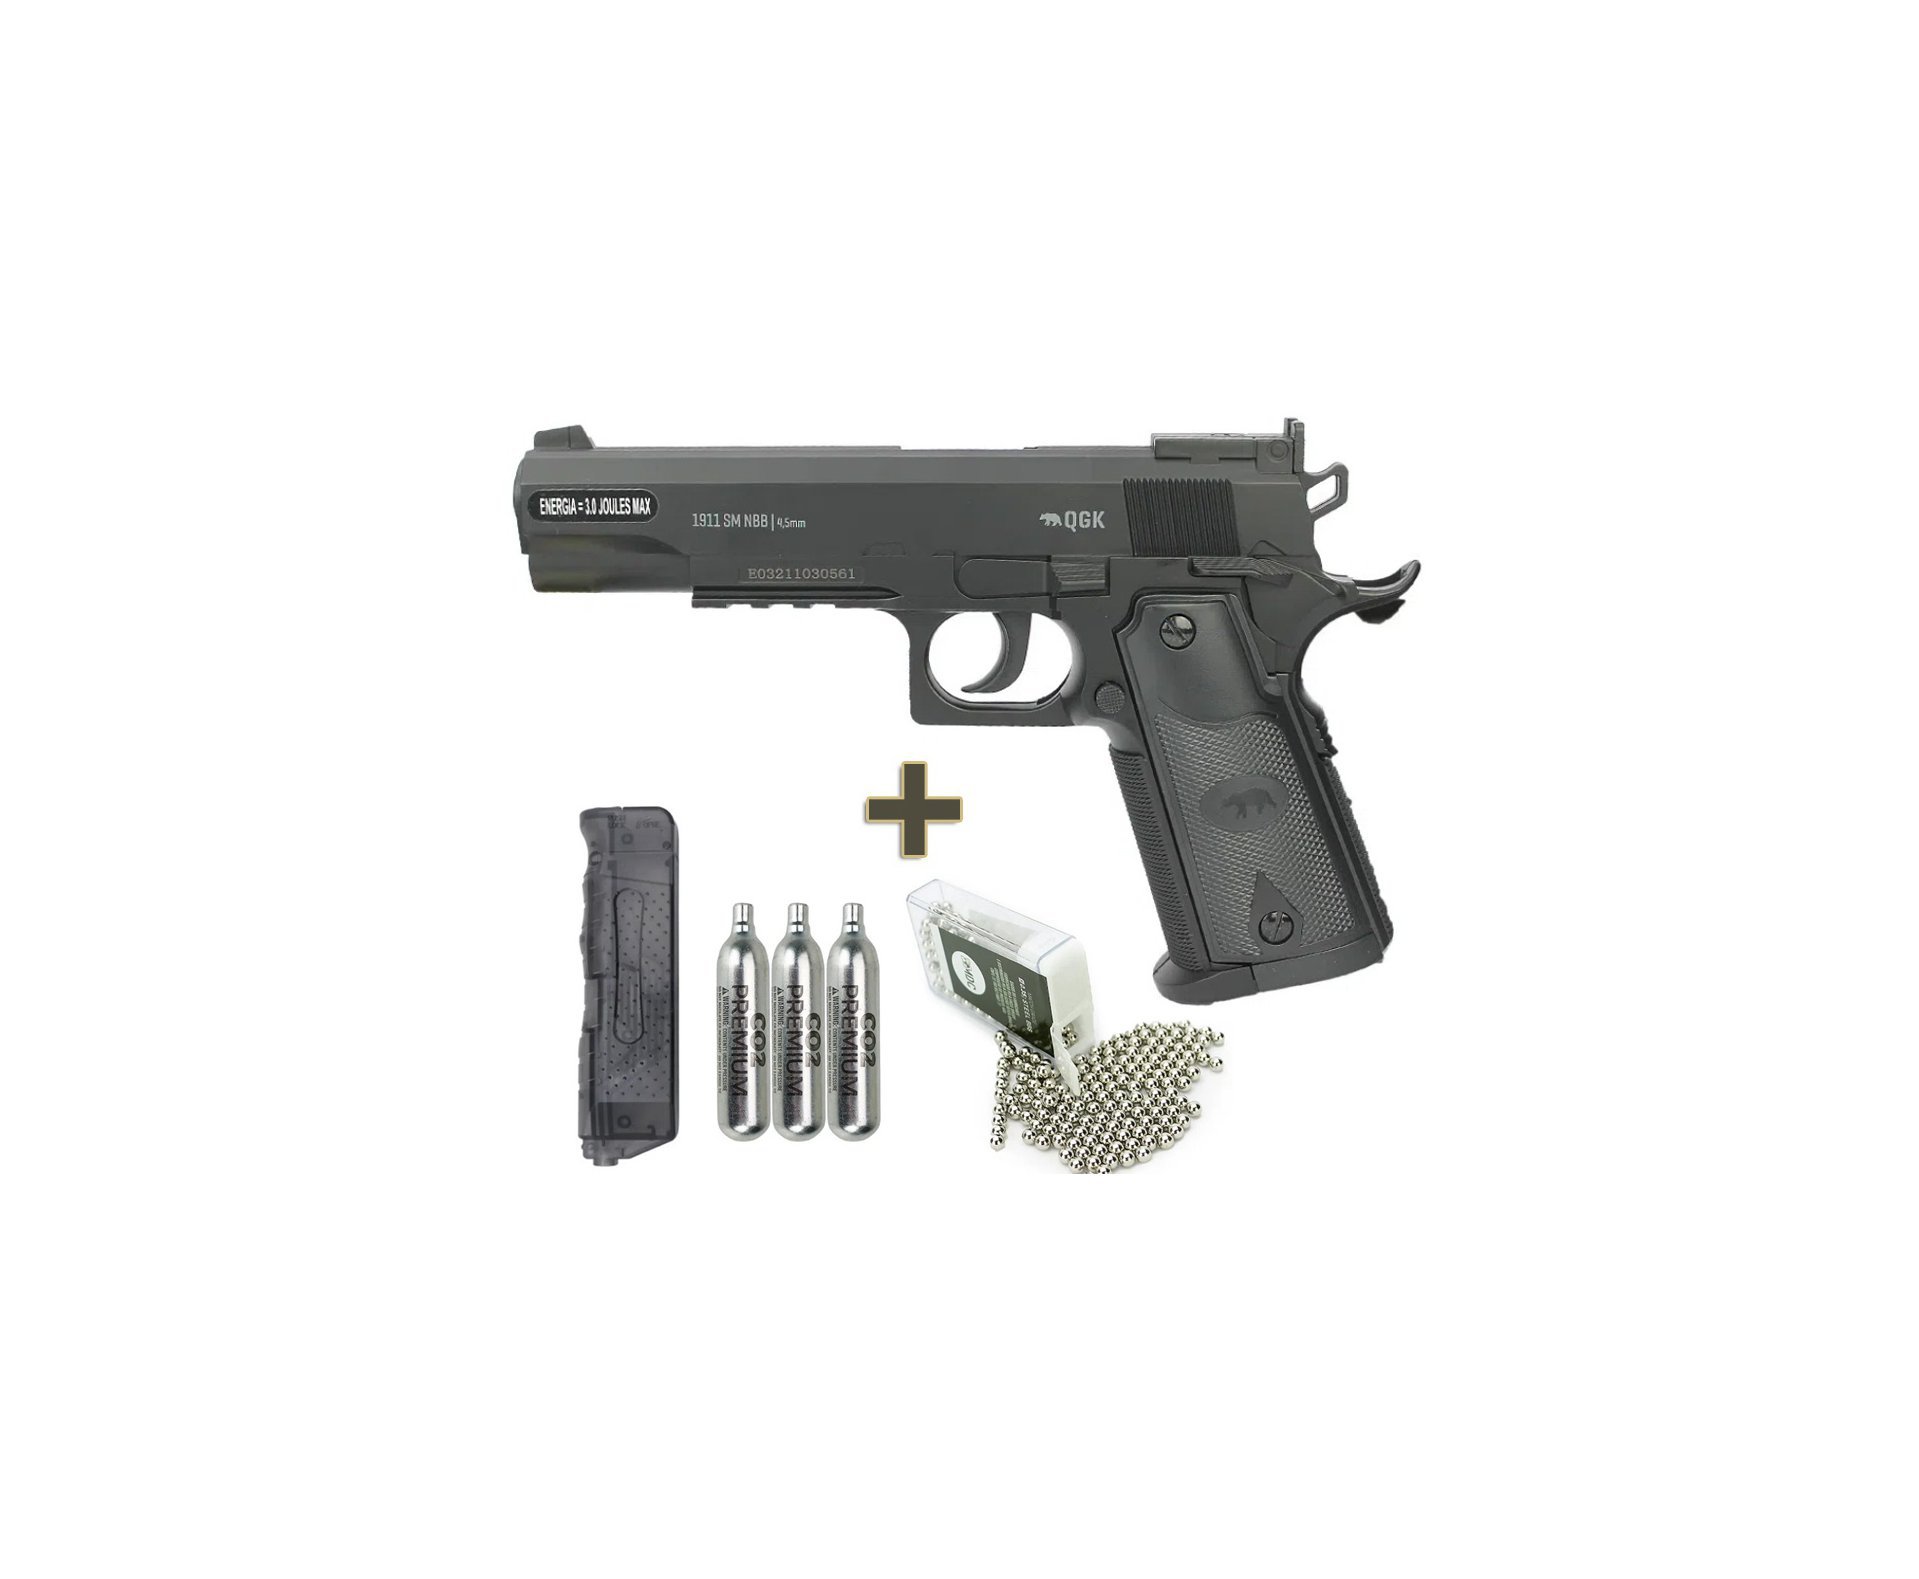 Pistola de Pressão Gás Co2 Colt 1911 4,5mm Power 3 Joules QGK + Co2 + bbs + Speed Loader